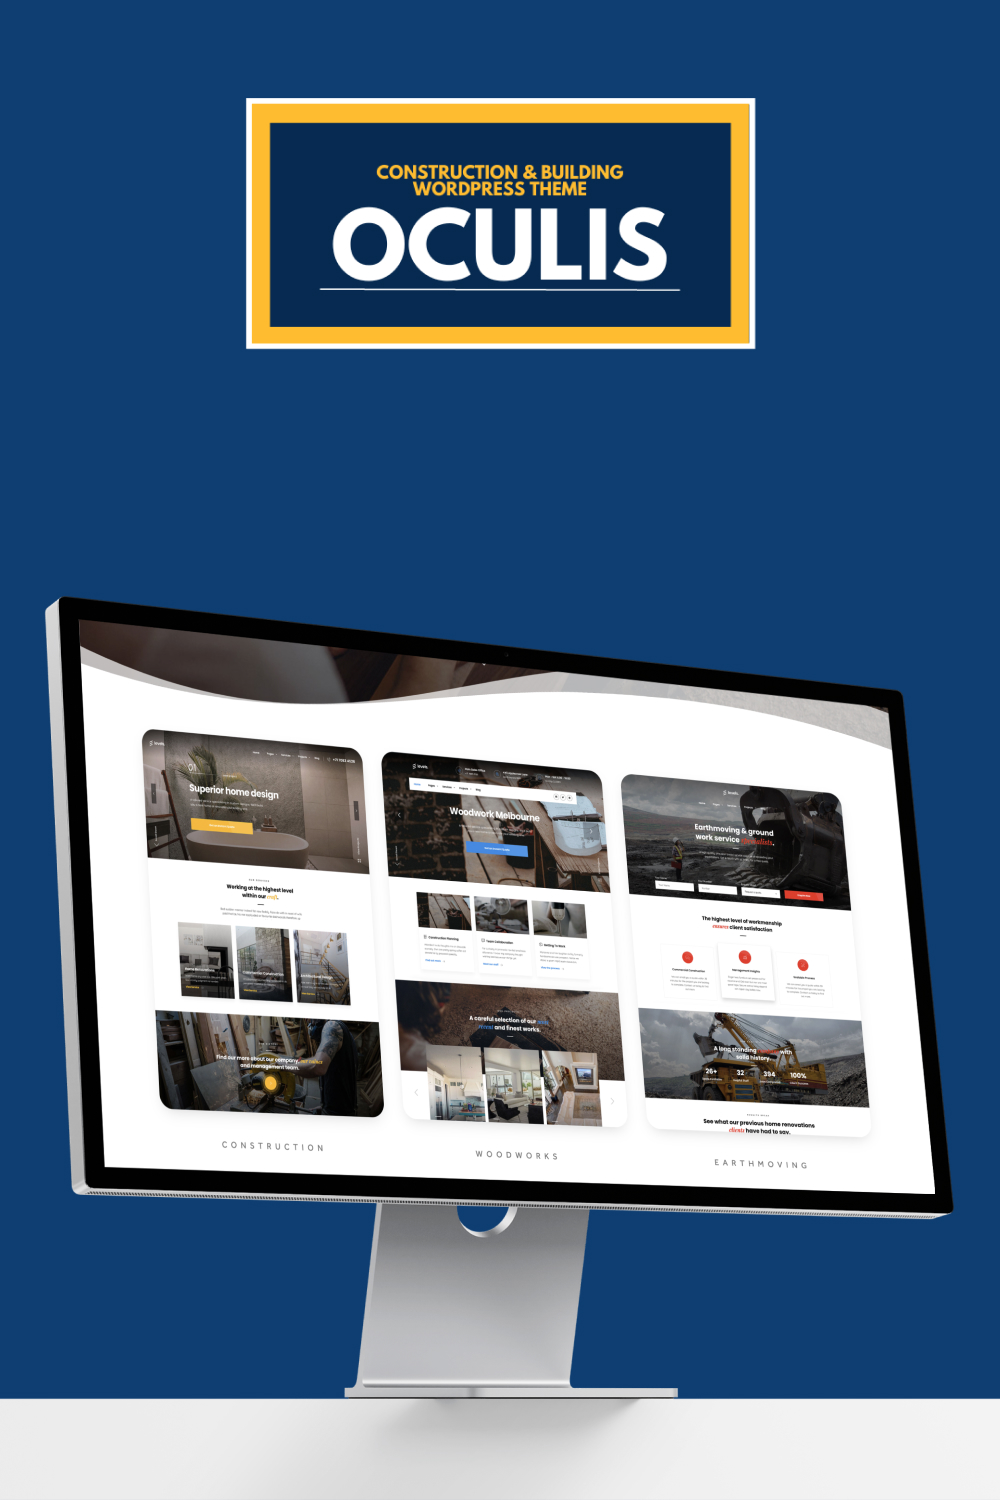 Oculis - Construction & Building WordPress Theme - Pinterest.